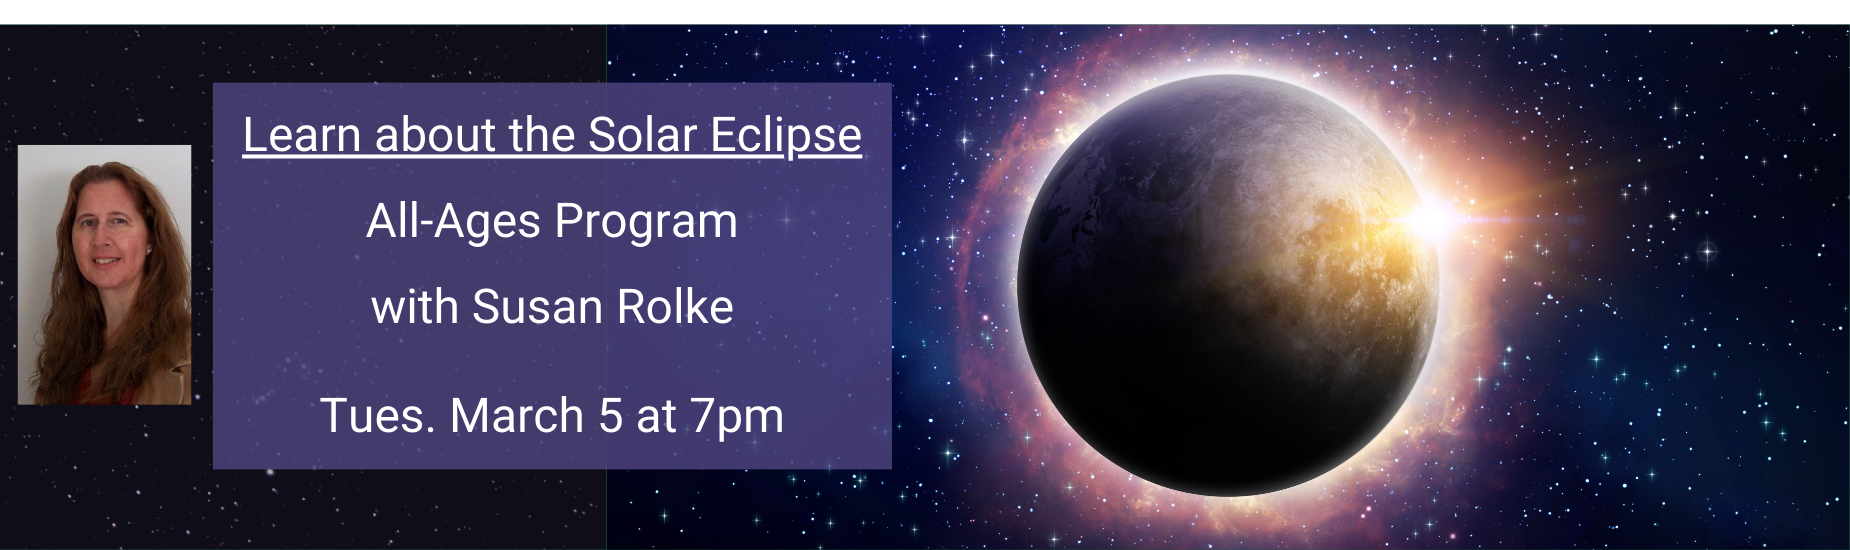 Solar Eclipse talk March 5 evening